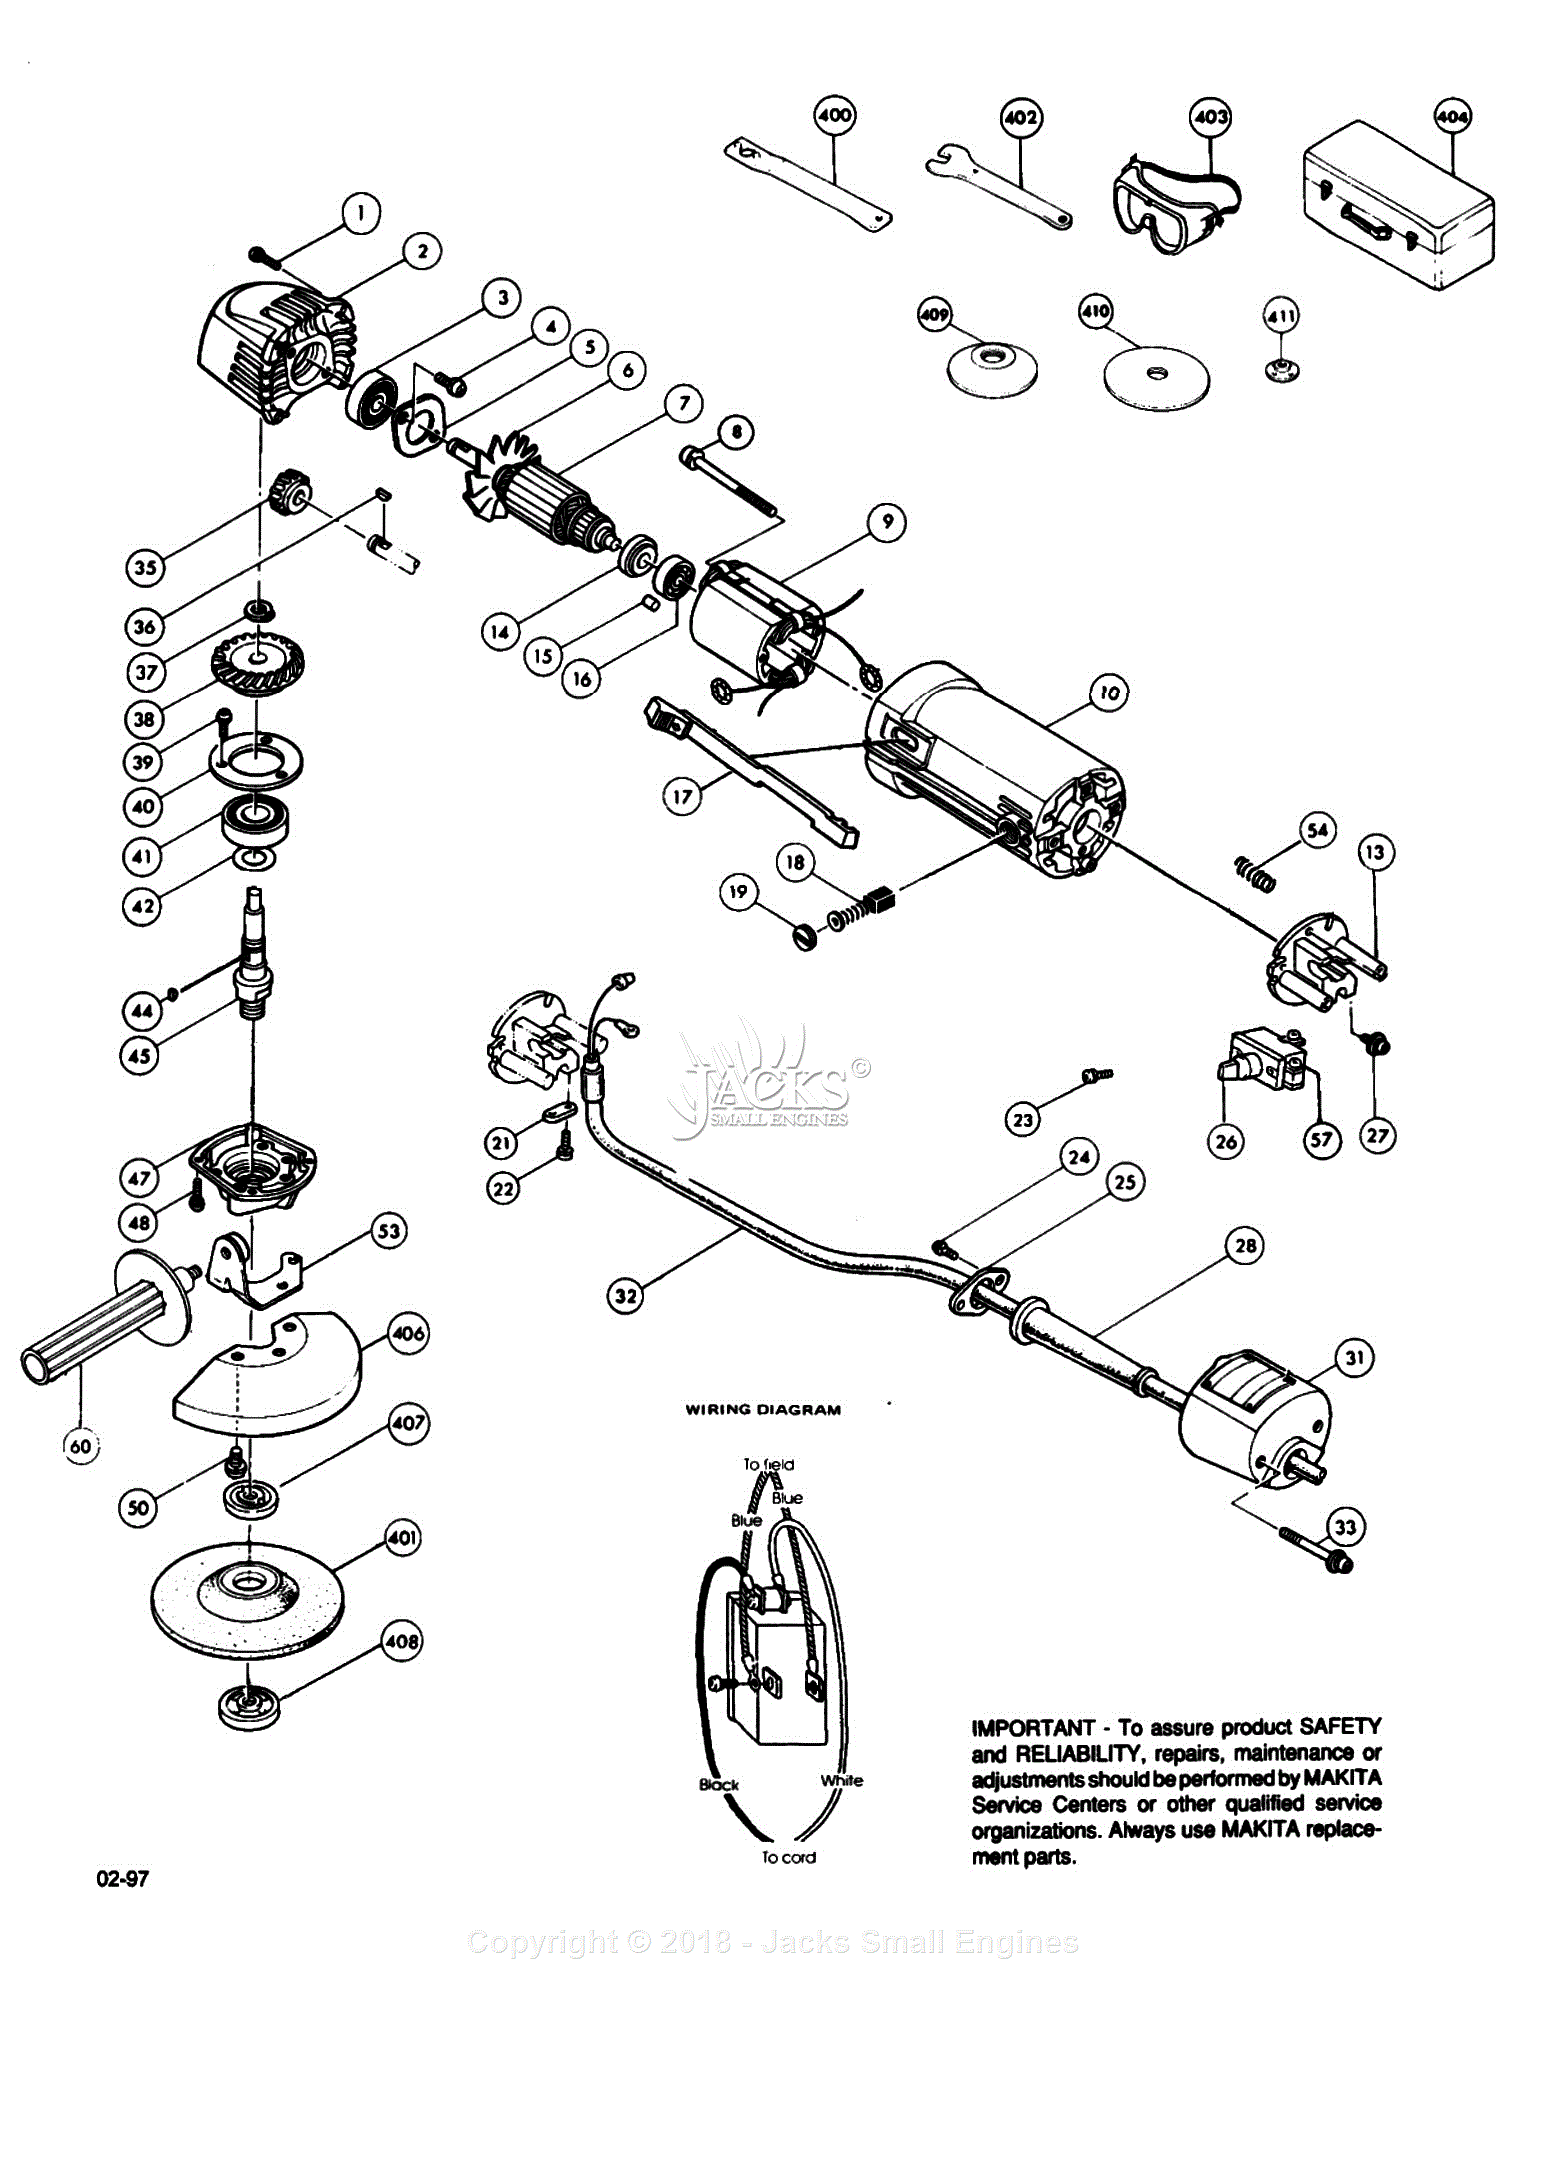 Bench Grinder Circuit Diagram